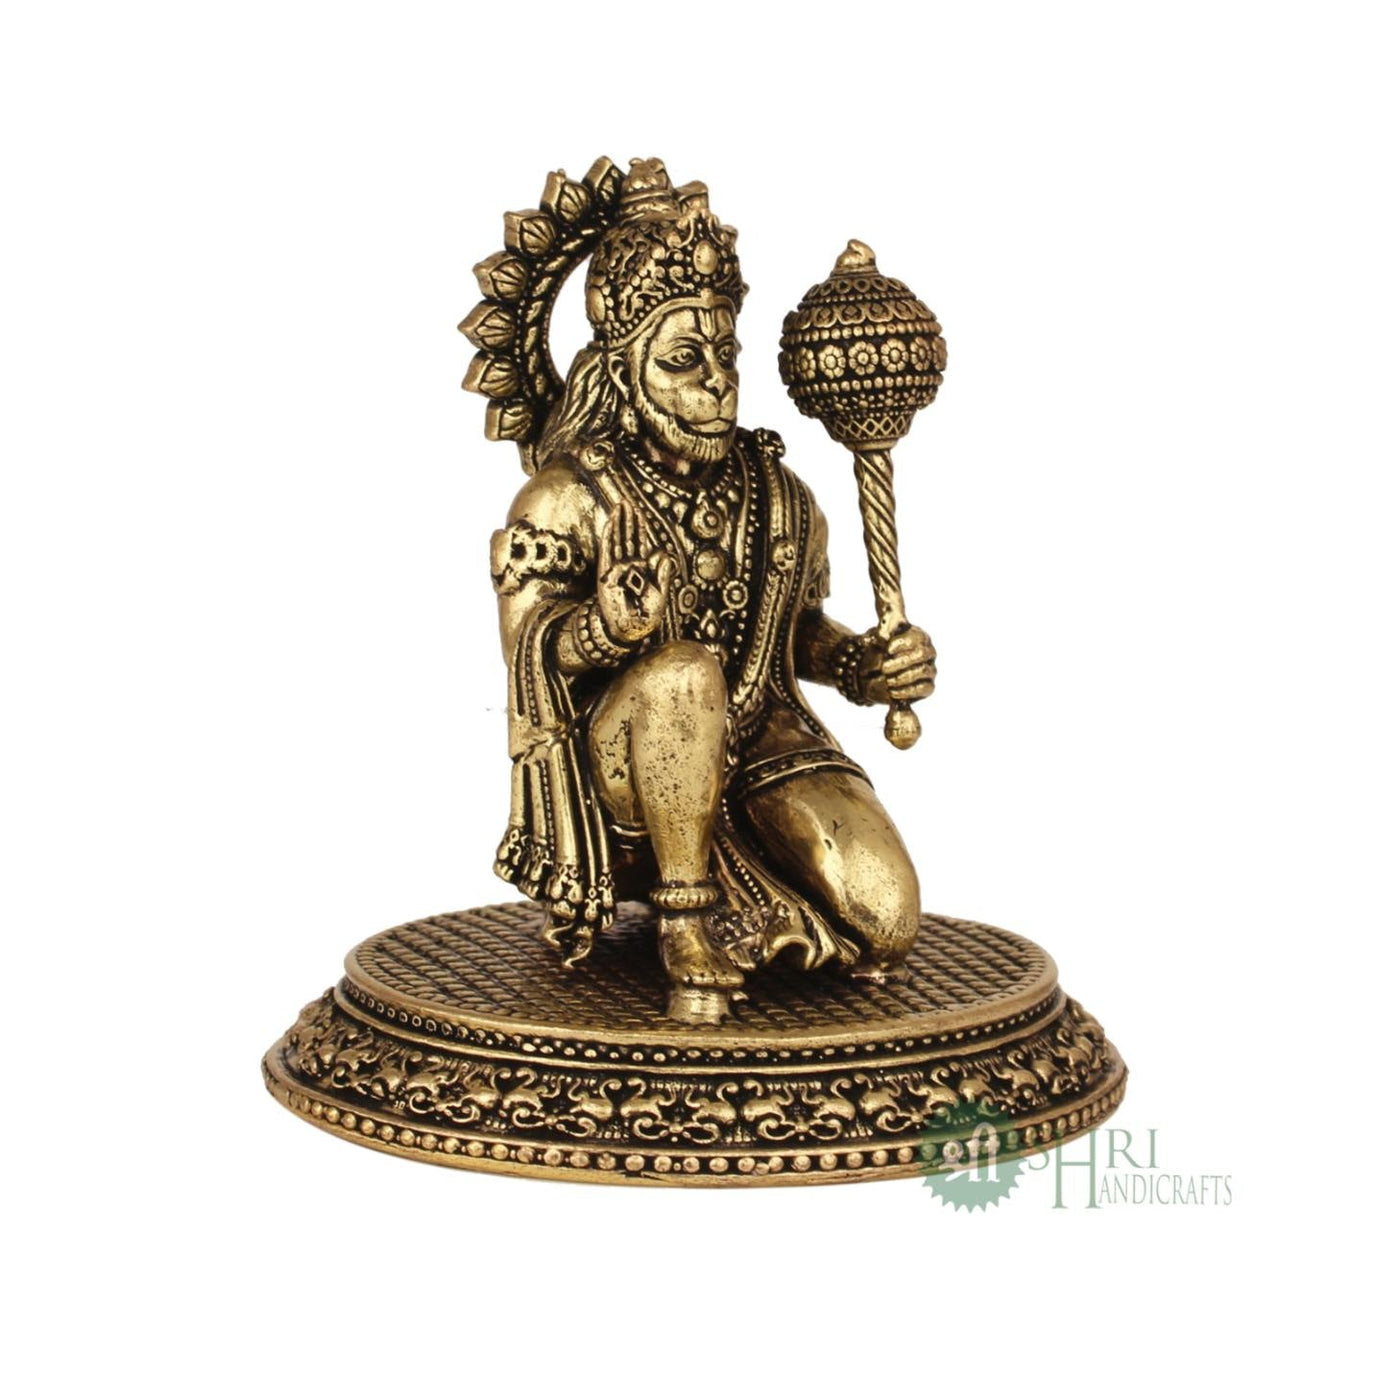 Brass Blessing Hanuman Statue 3.5 Inch By Trendia Decor